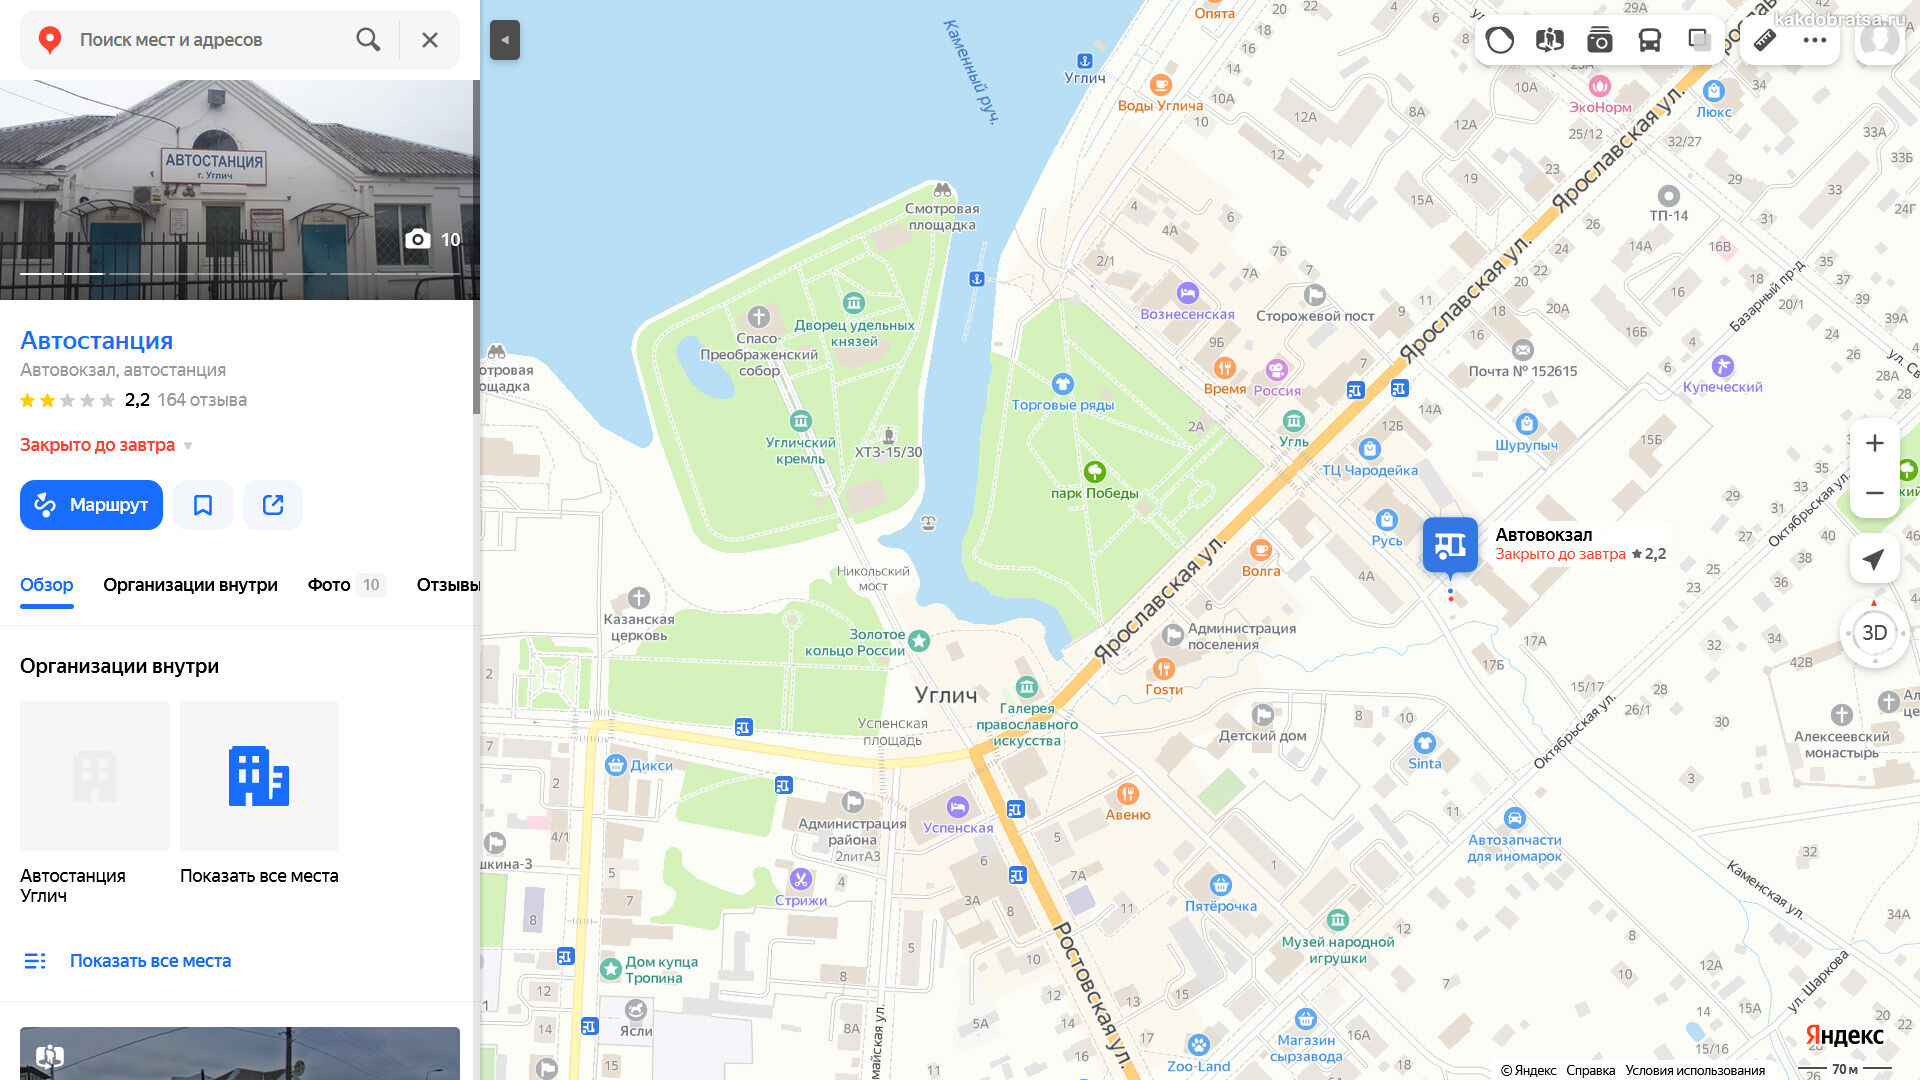 Углич Автовокзал на карте точка и адрес